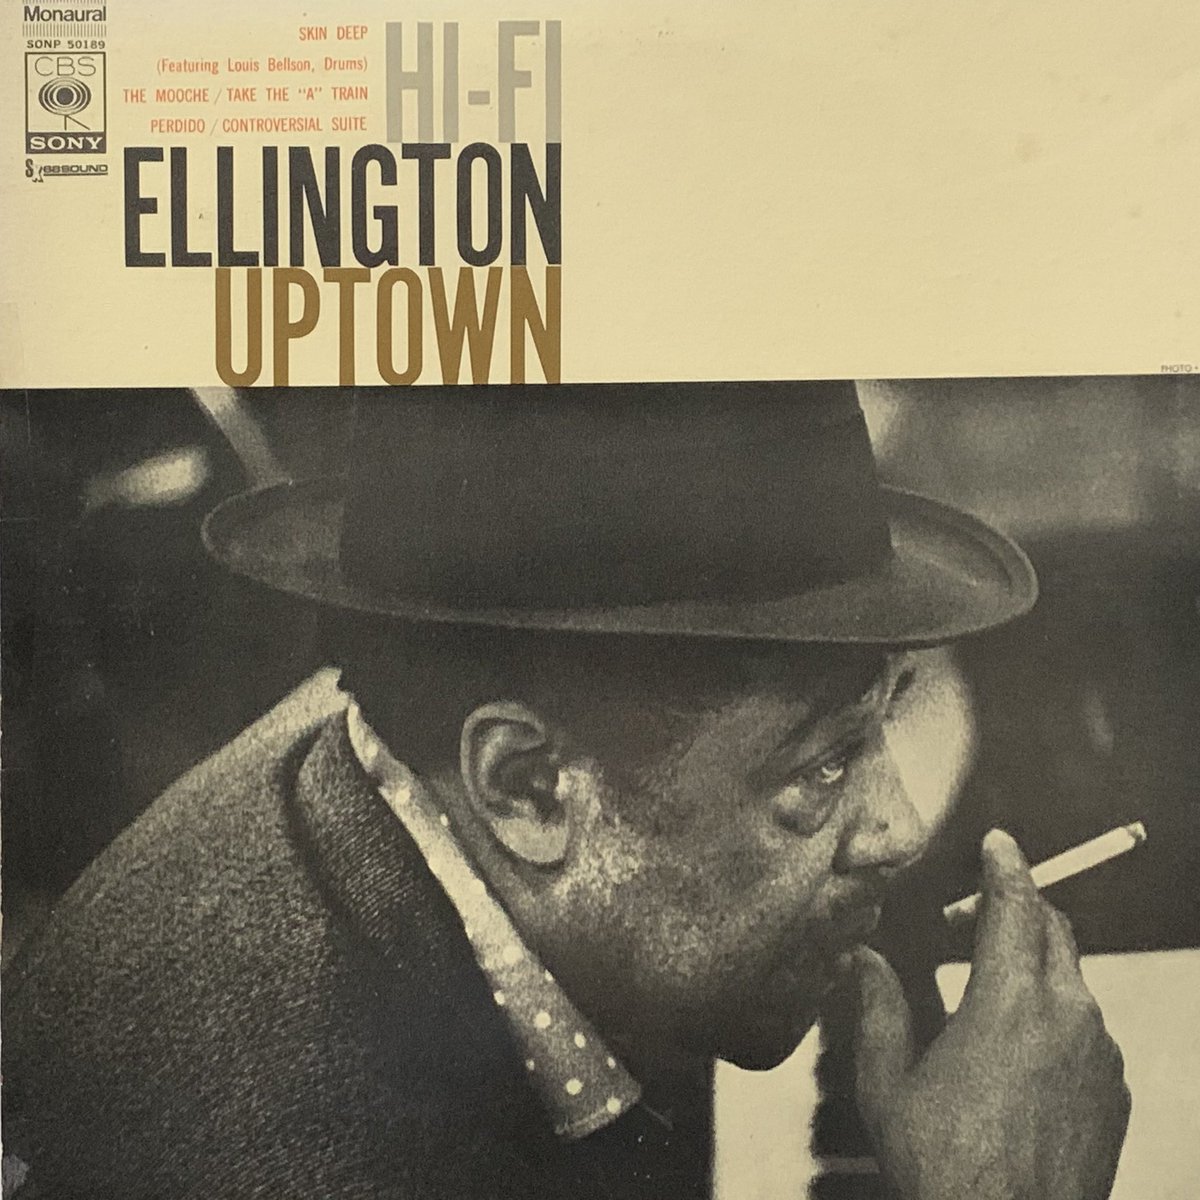 HI-FI ELLINGTON UP TOWN Duke Ellington and his Orchestra Recorded 1952